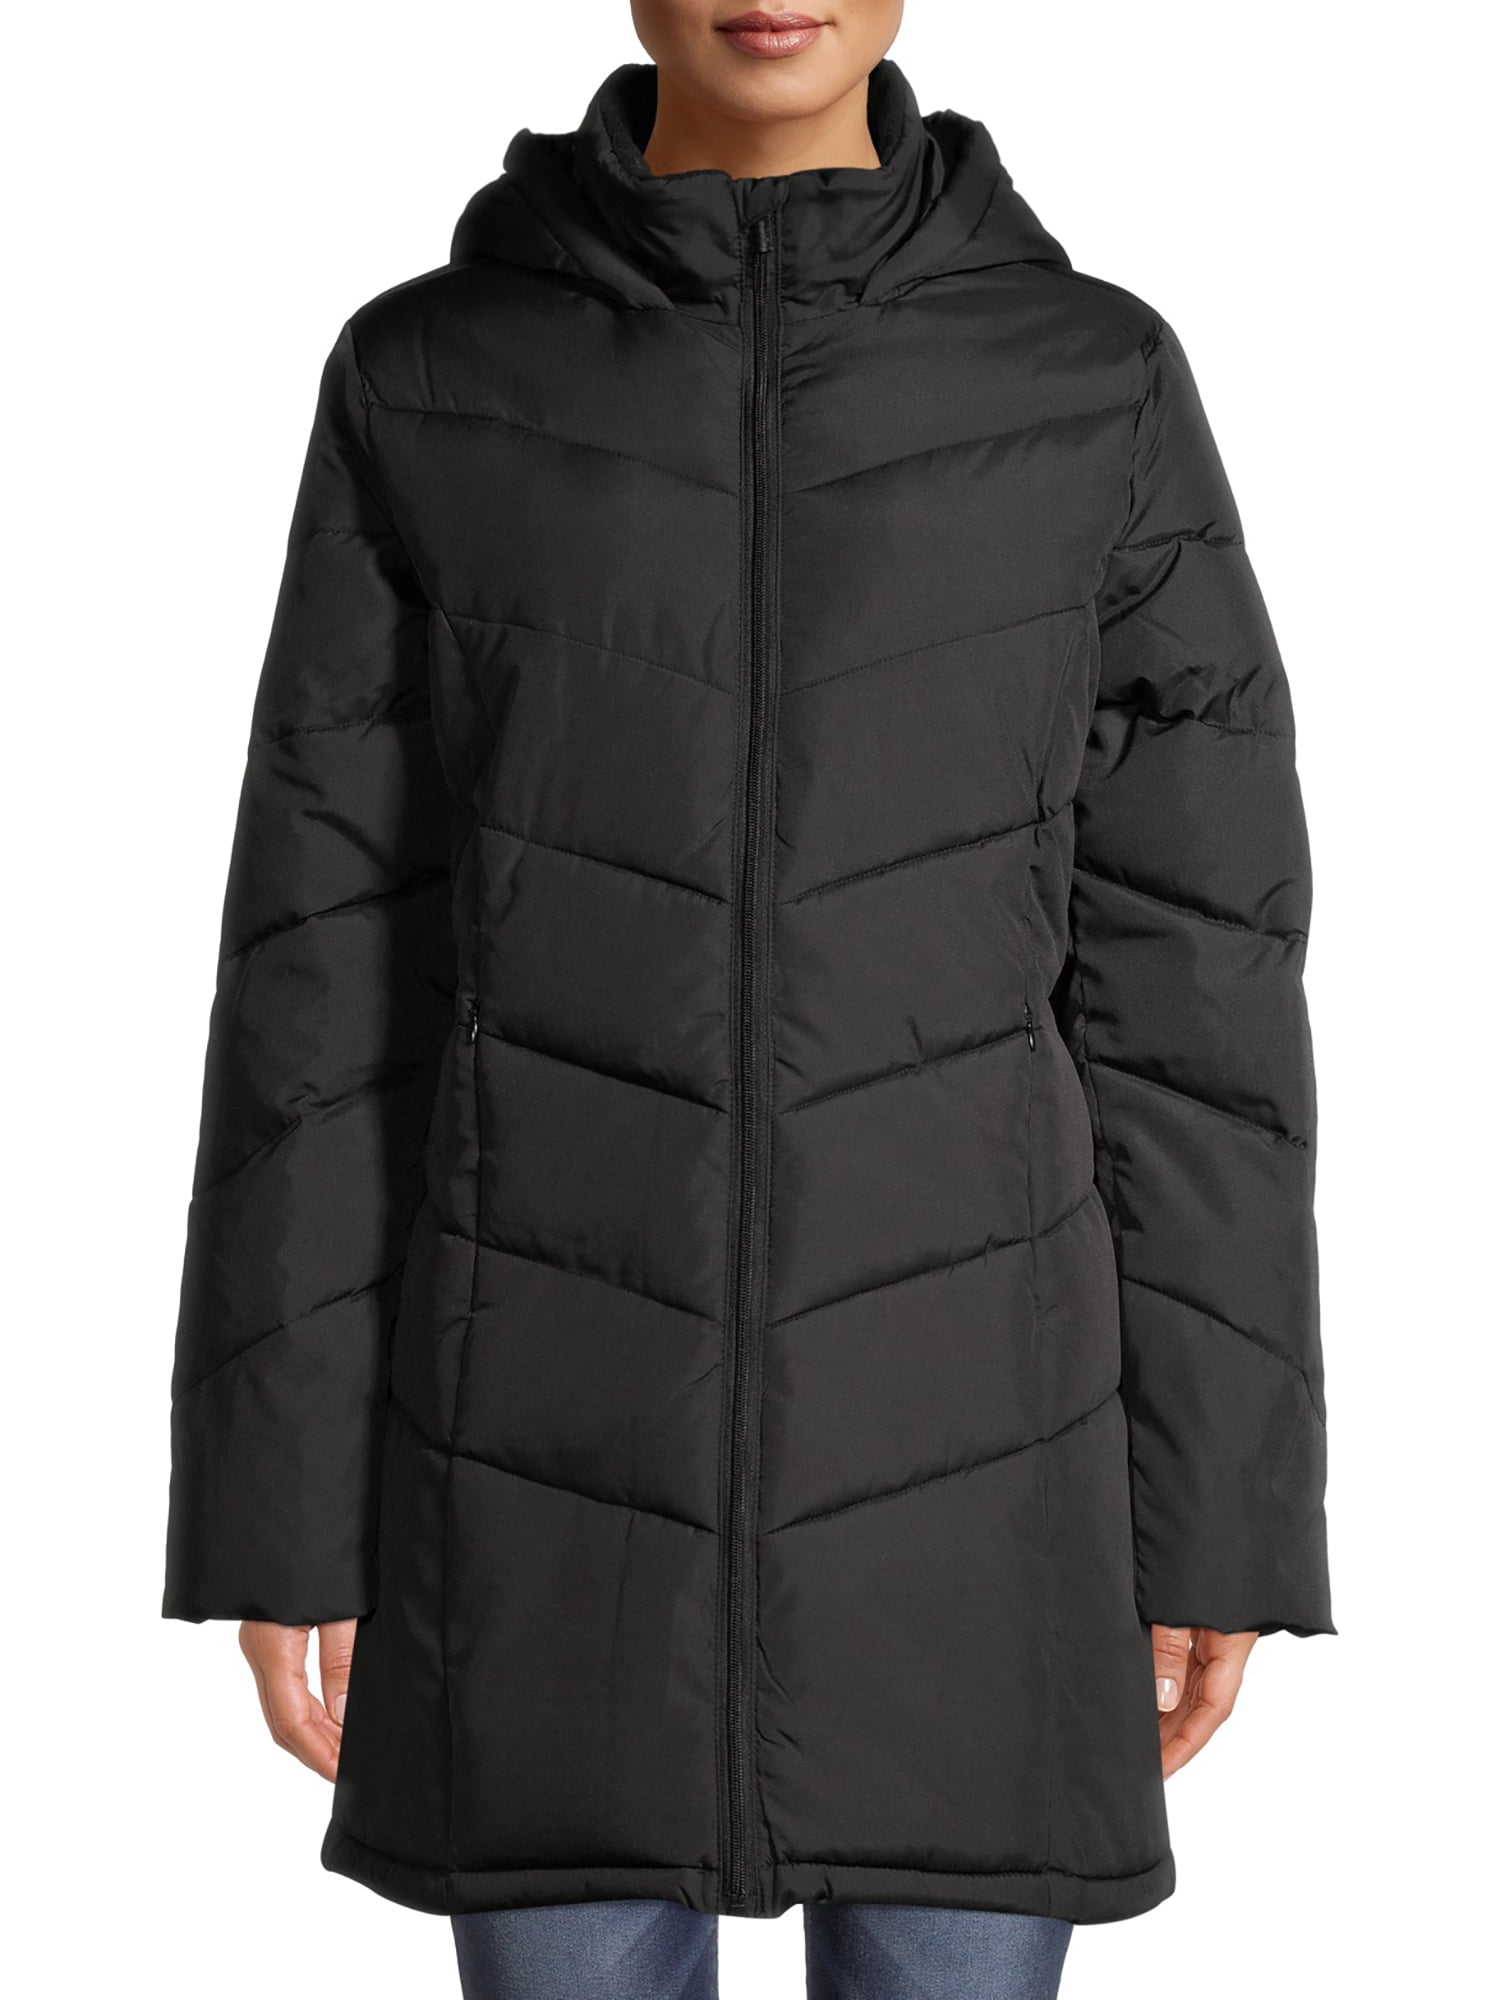 Big Chill Women’s Chevron Quilted Puffer Coats  $31.99 at Walmart